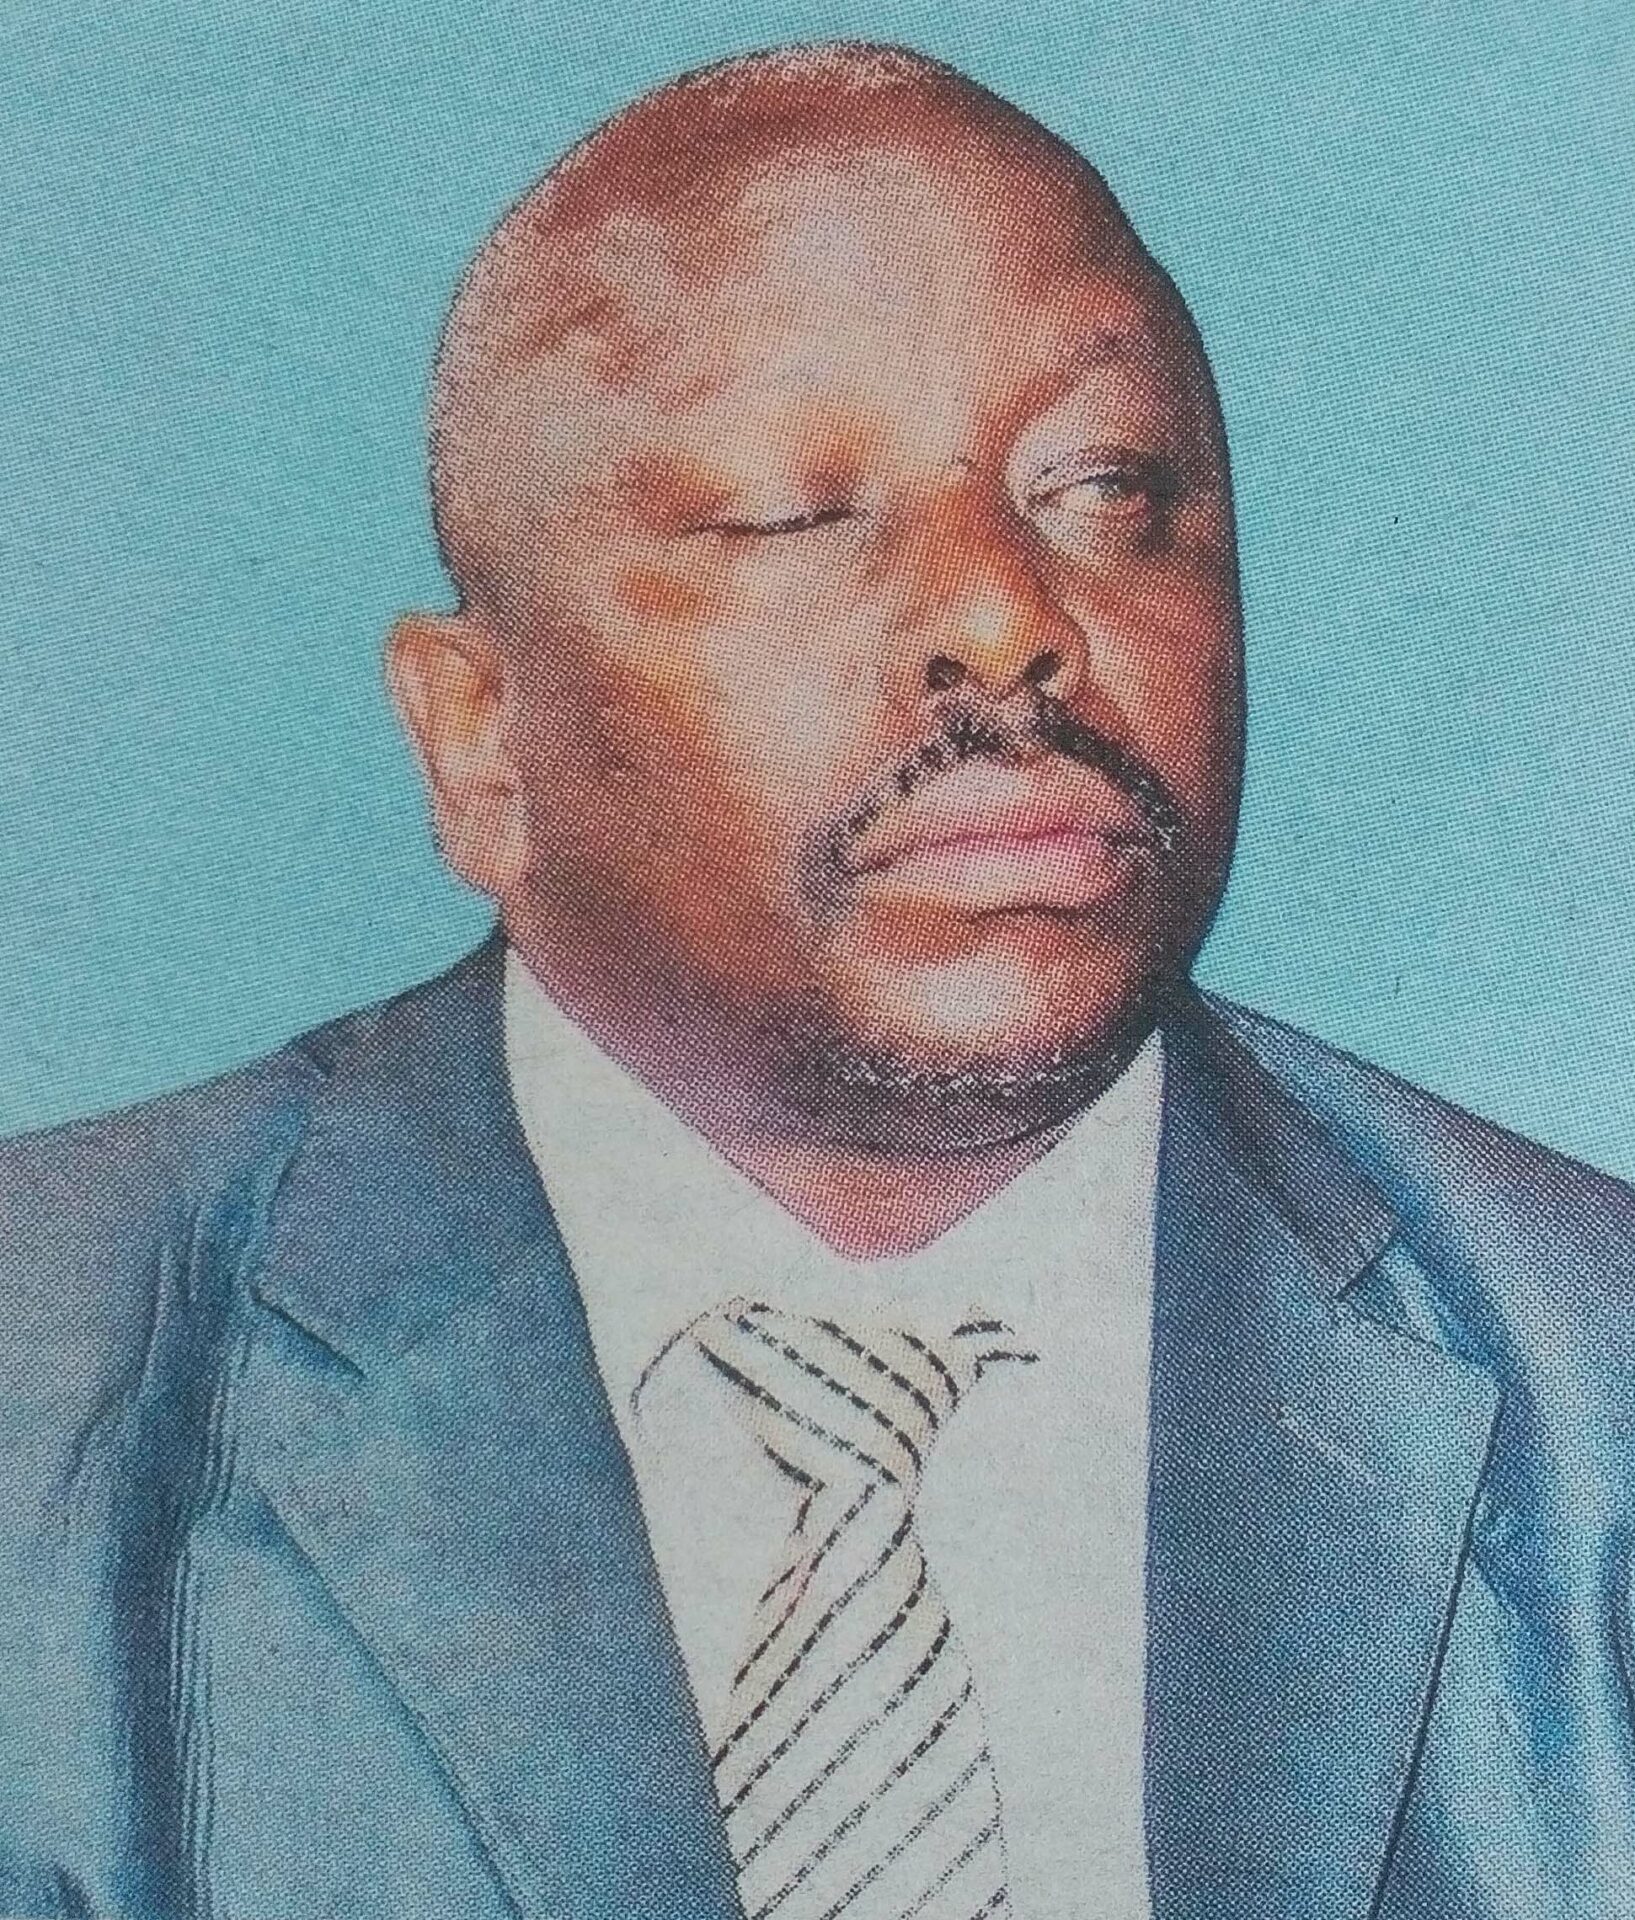 Obituary Image of Henry KimataWaruiru (H.K)